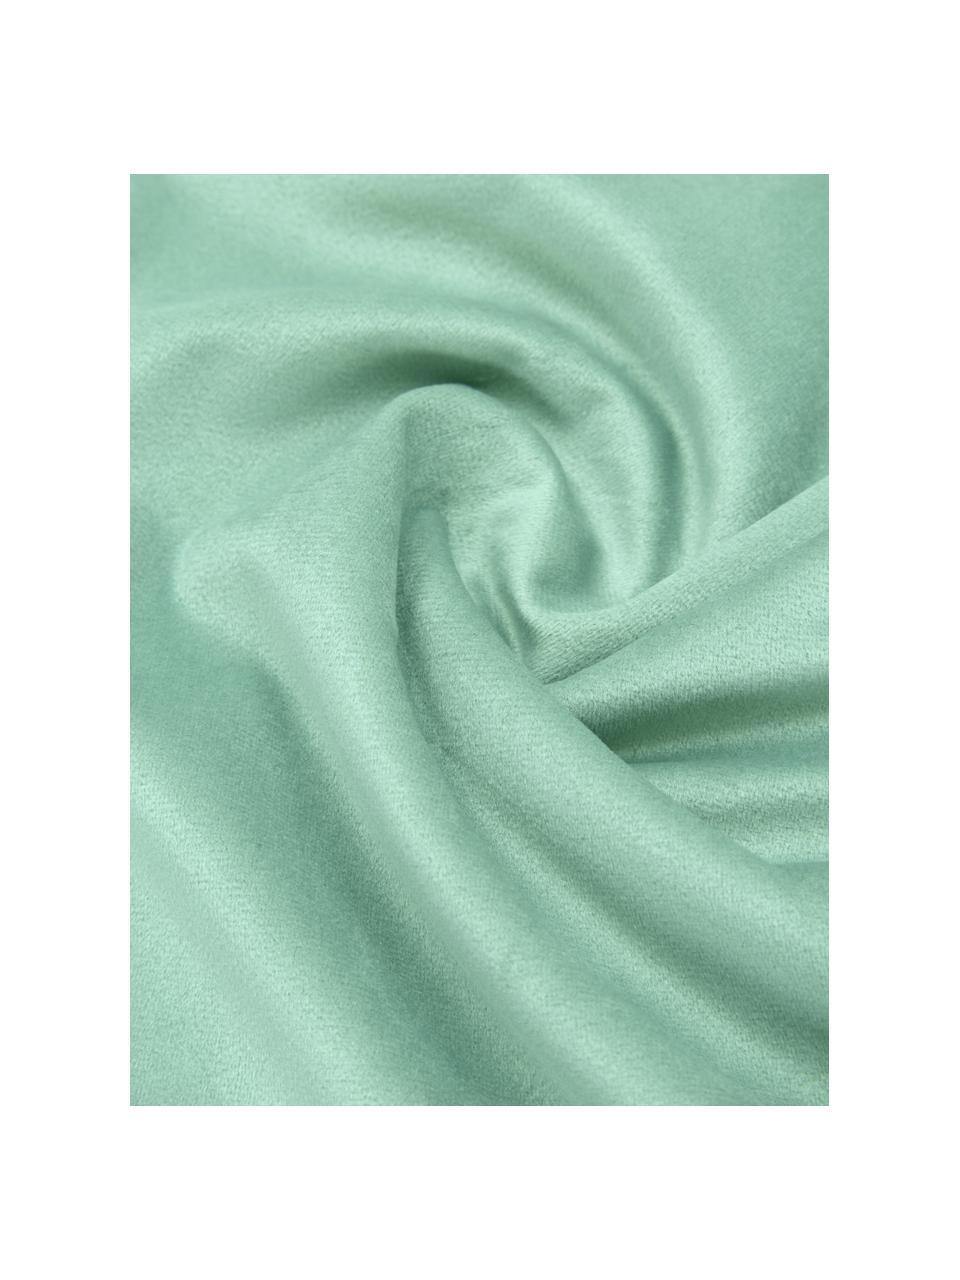 Fluwelen kussenhoes Lucie in saliegroen met structuur-oppervlak, 100% fluweel (polyester), Groen, B 30 x L 50 cm